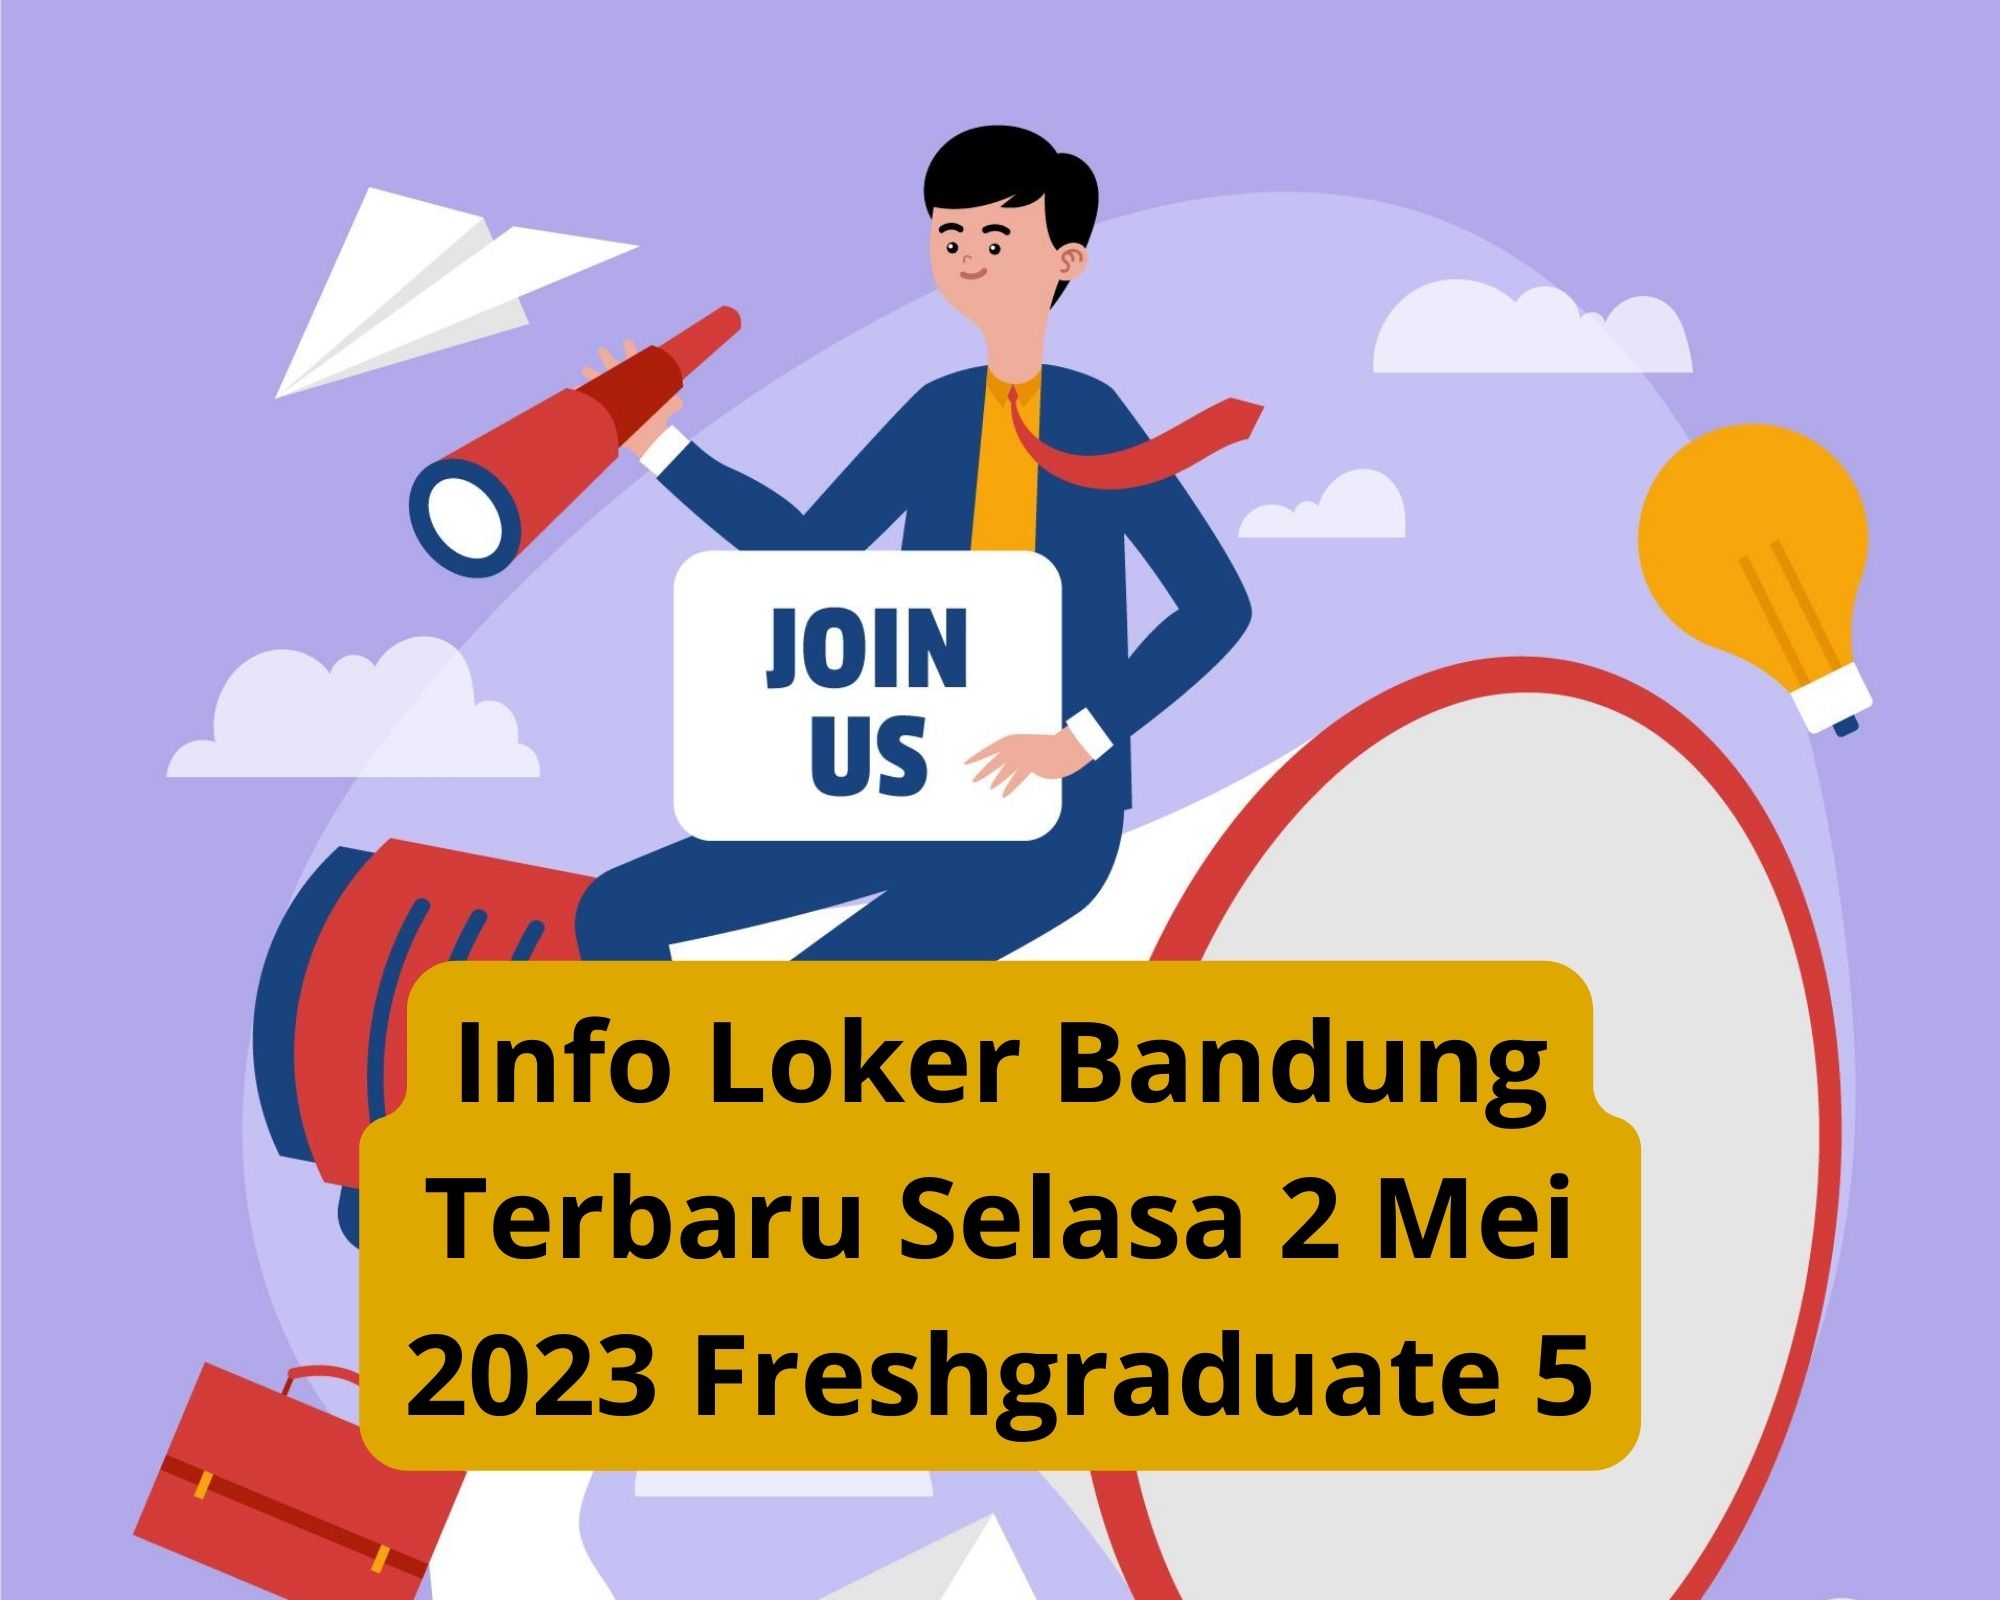 Info Loker Bandung Terbaru Selasa 2 Mei 2023 Freshgraduate 5